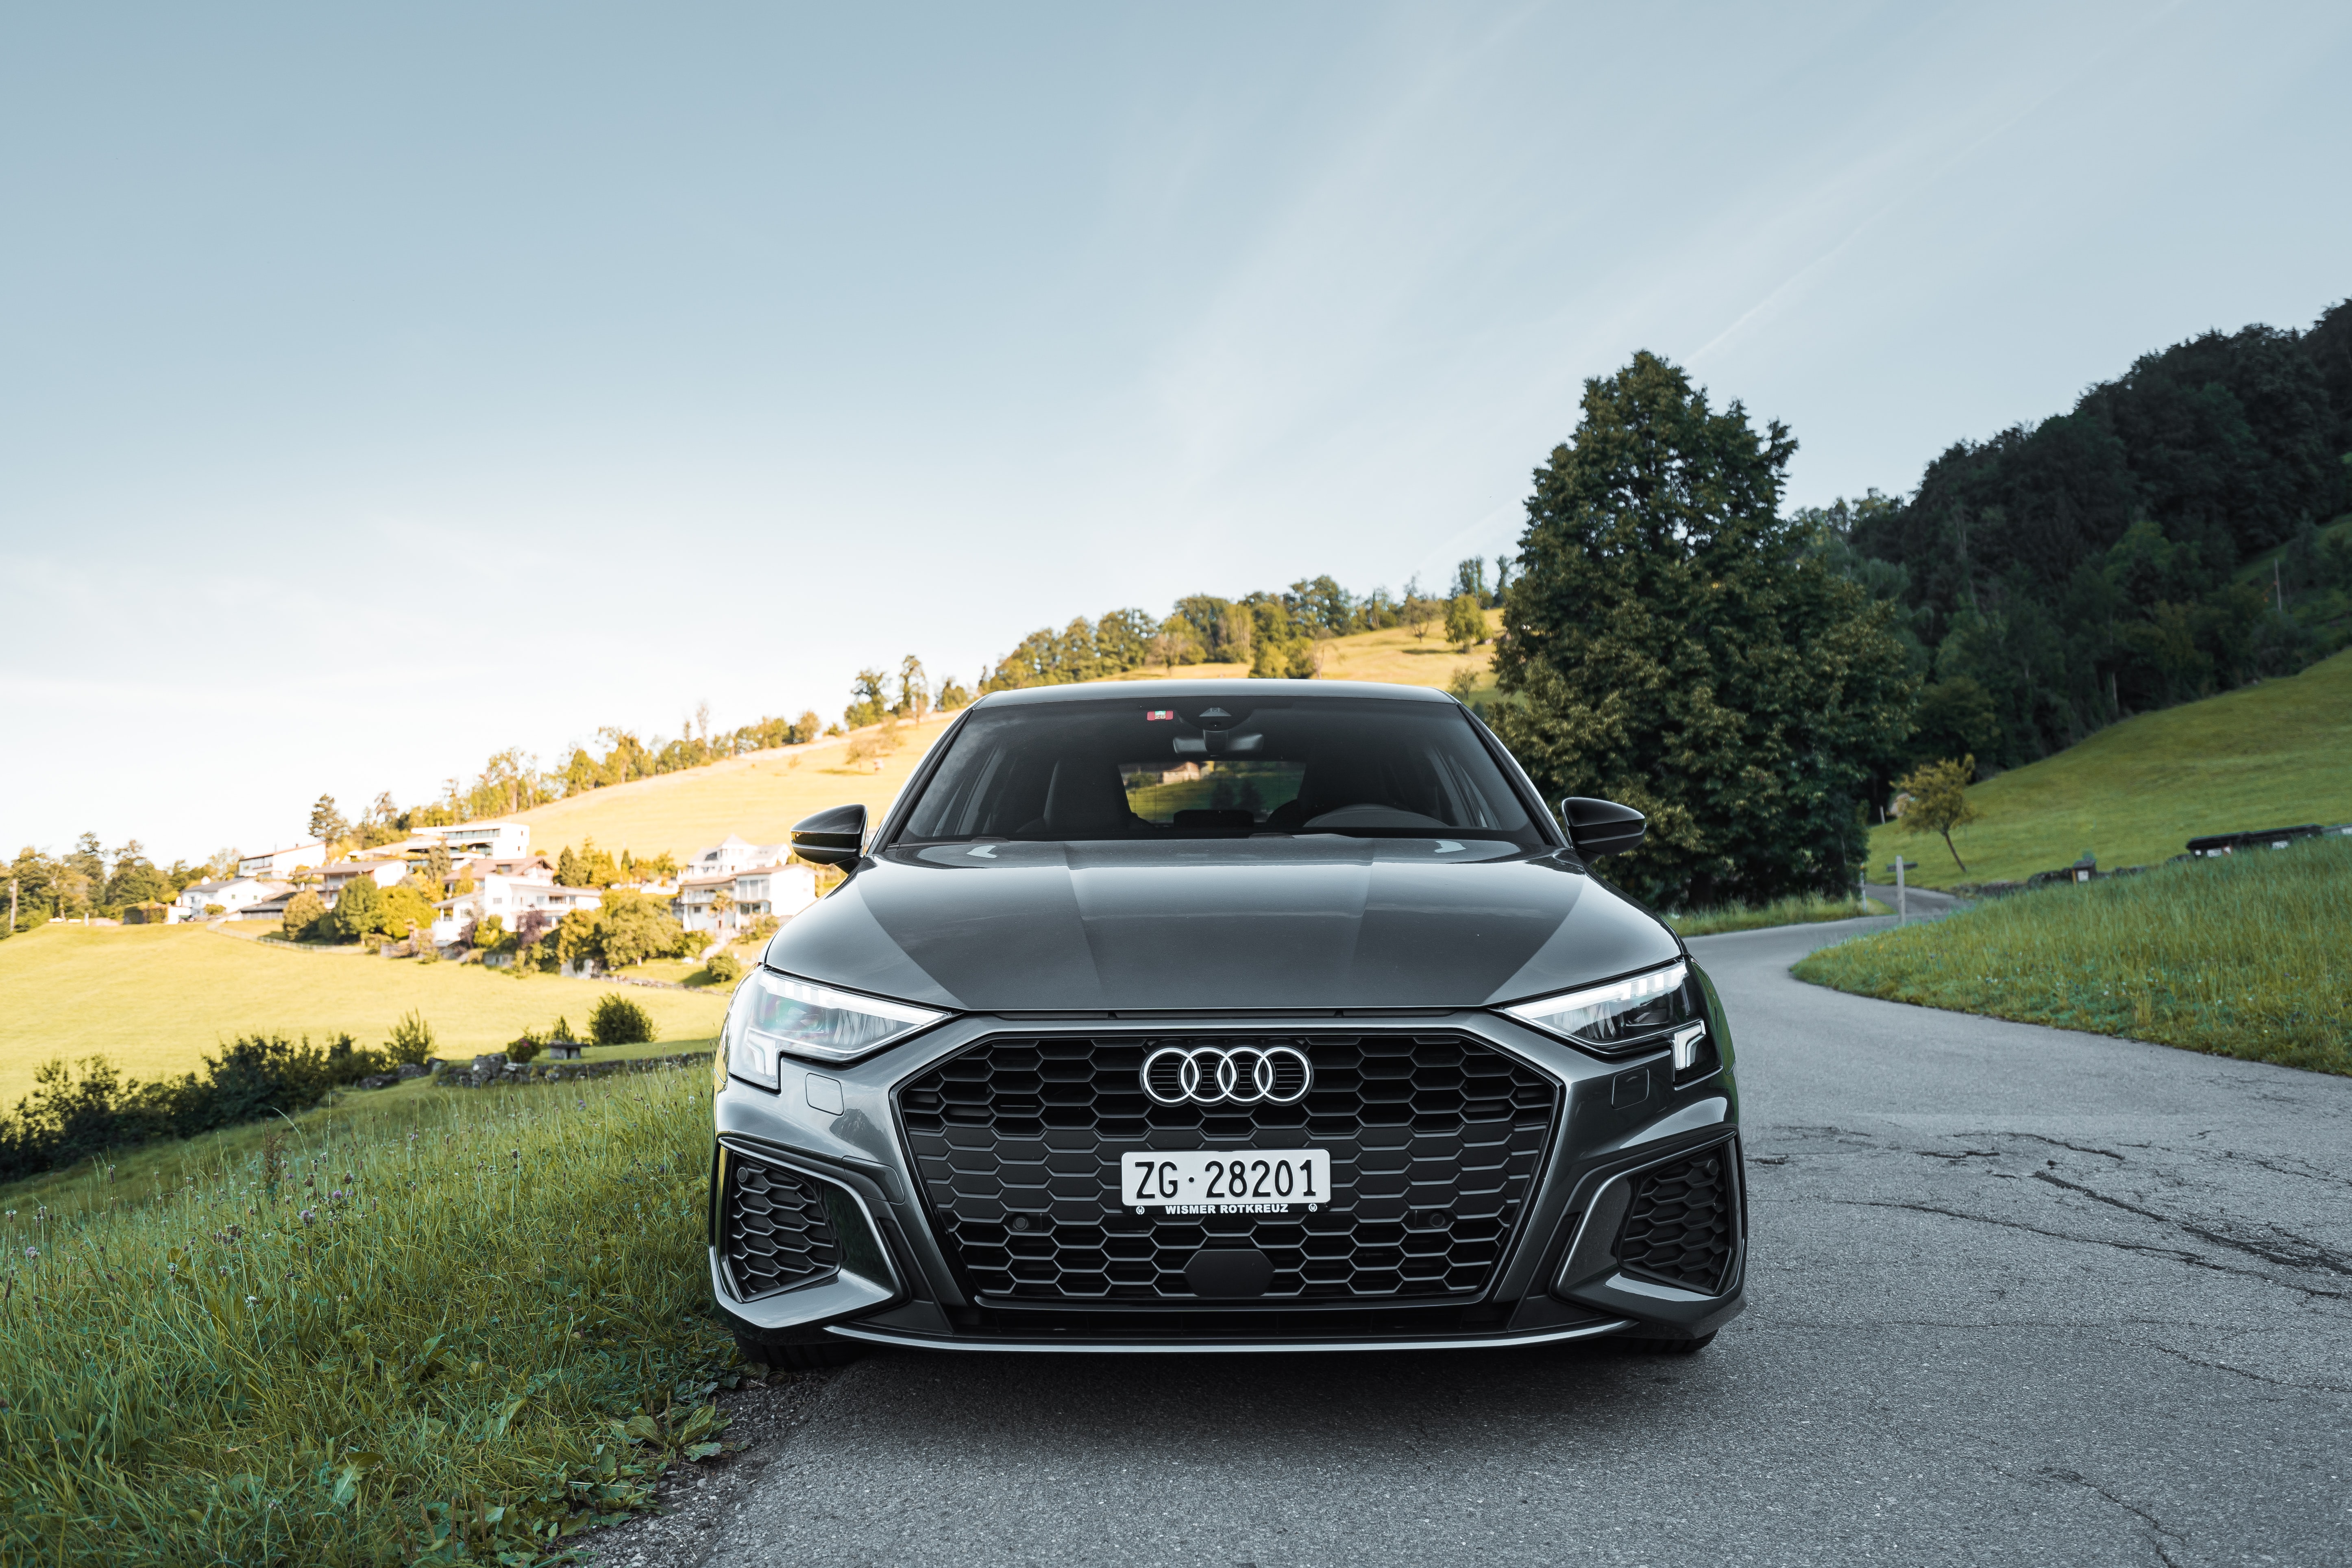 Audi A3 Ultrawide Wallpapers